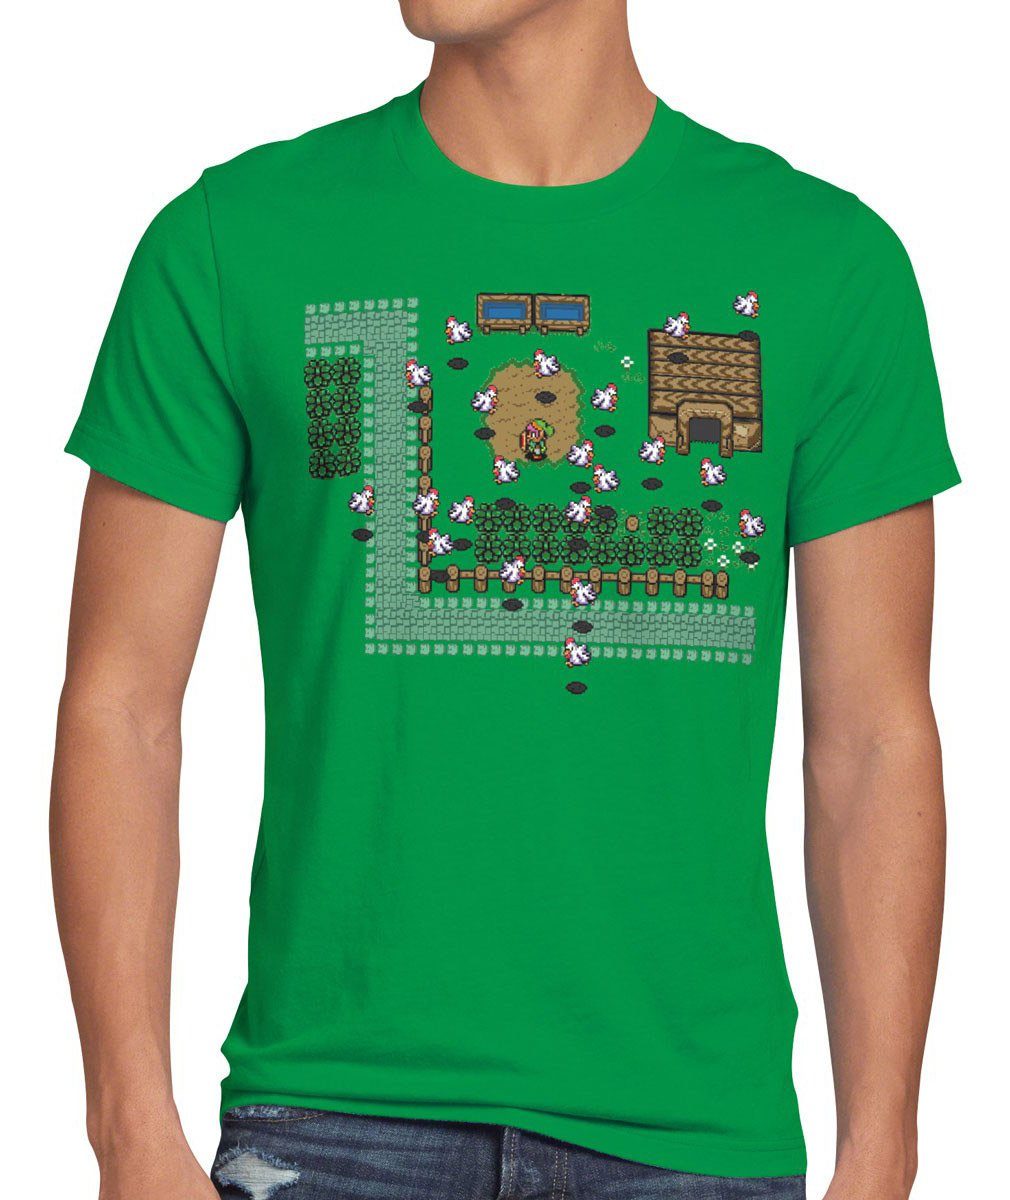 style3 Print-Shirt Herren T-Shirt Link Retro Gamer zelda gameboy Kult Fan Pixel Spiel Game switch grün